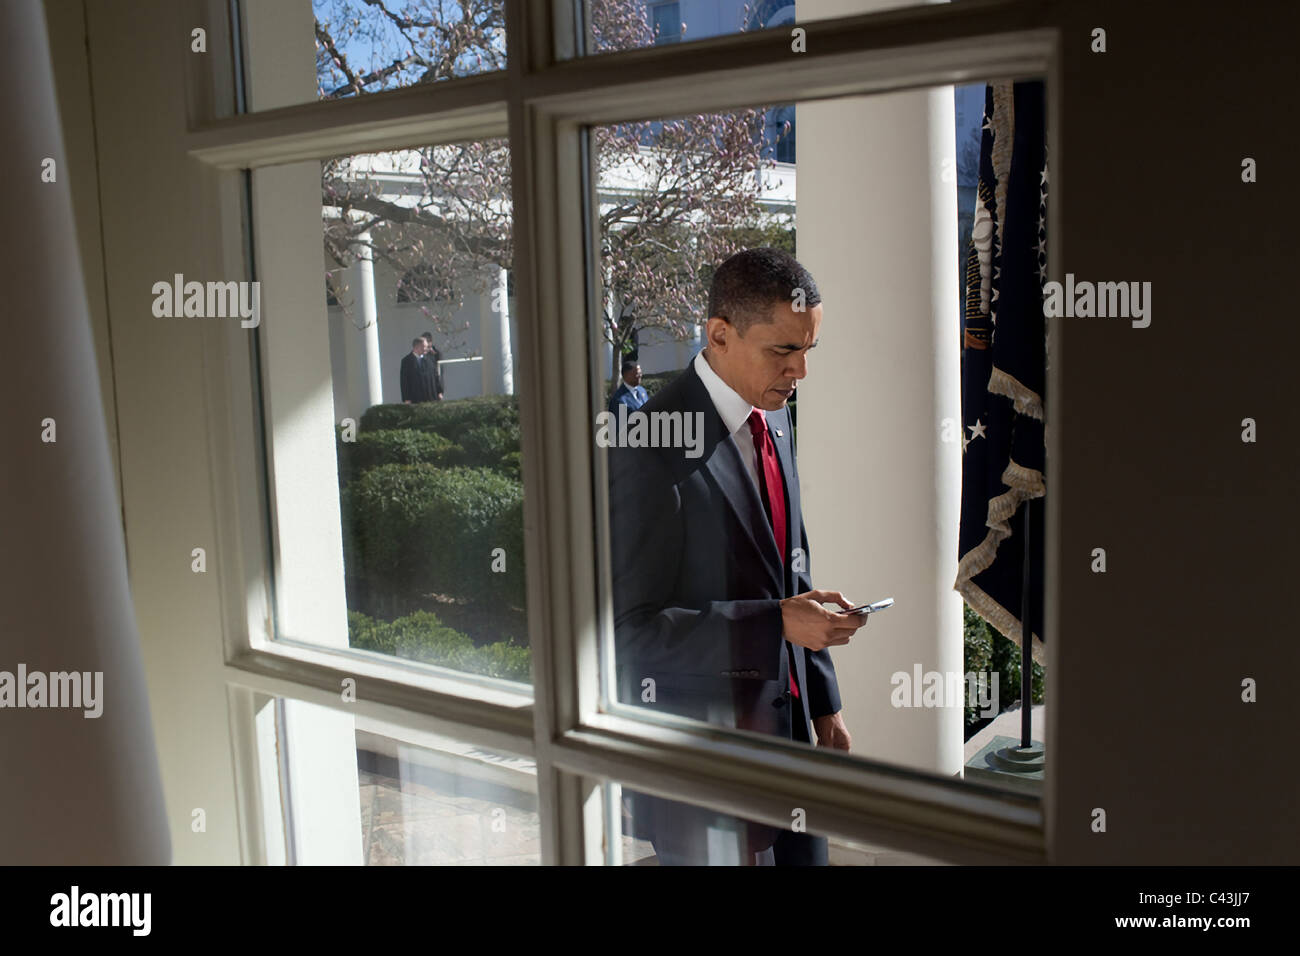 Präsident Barack Obama prüft seine BlackBerry wie er entlang der Kolonnade, Oval Office, 18. März 2010 Spaziergänge. Stockfoto